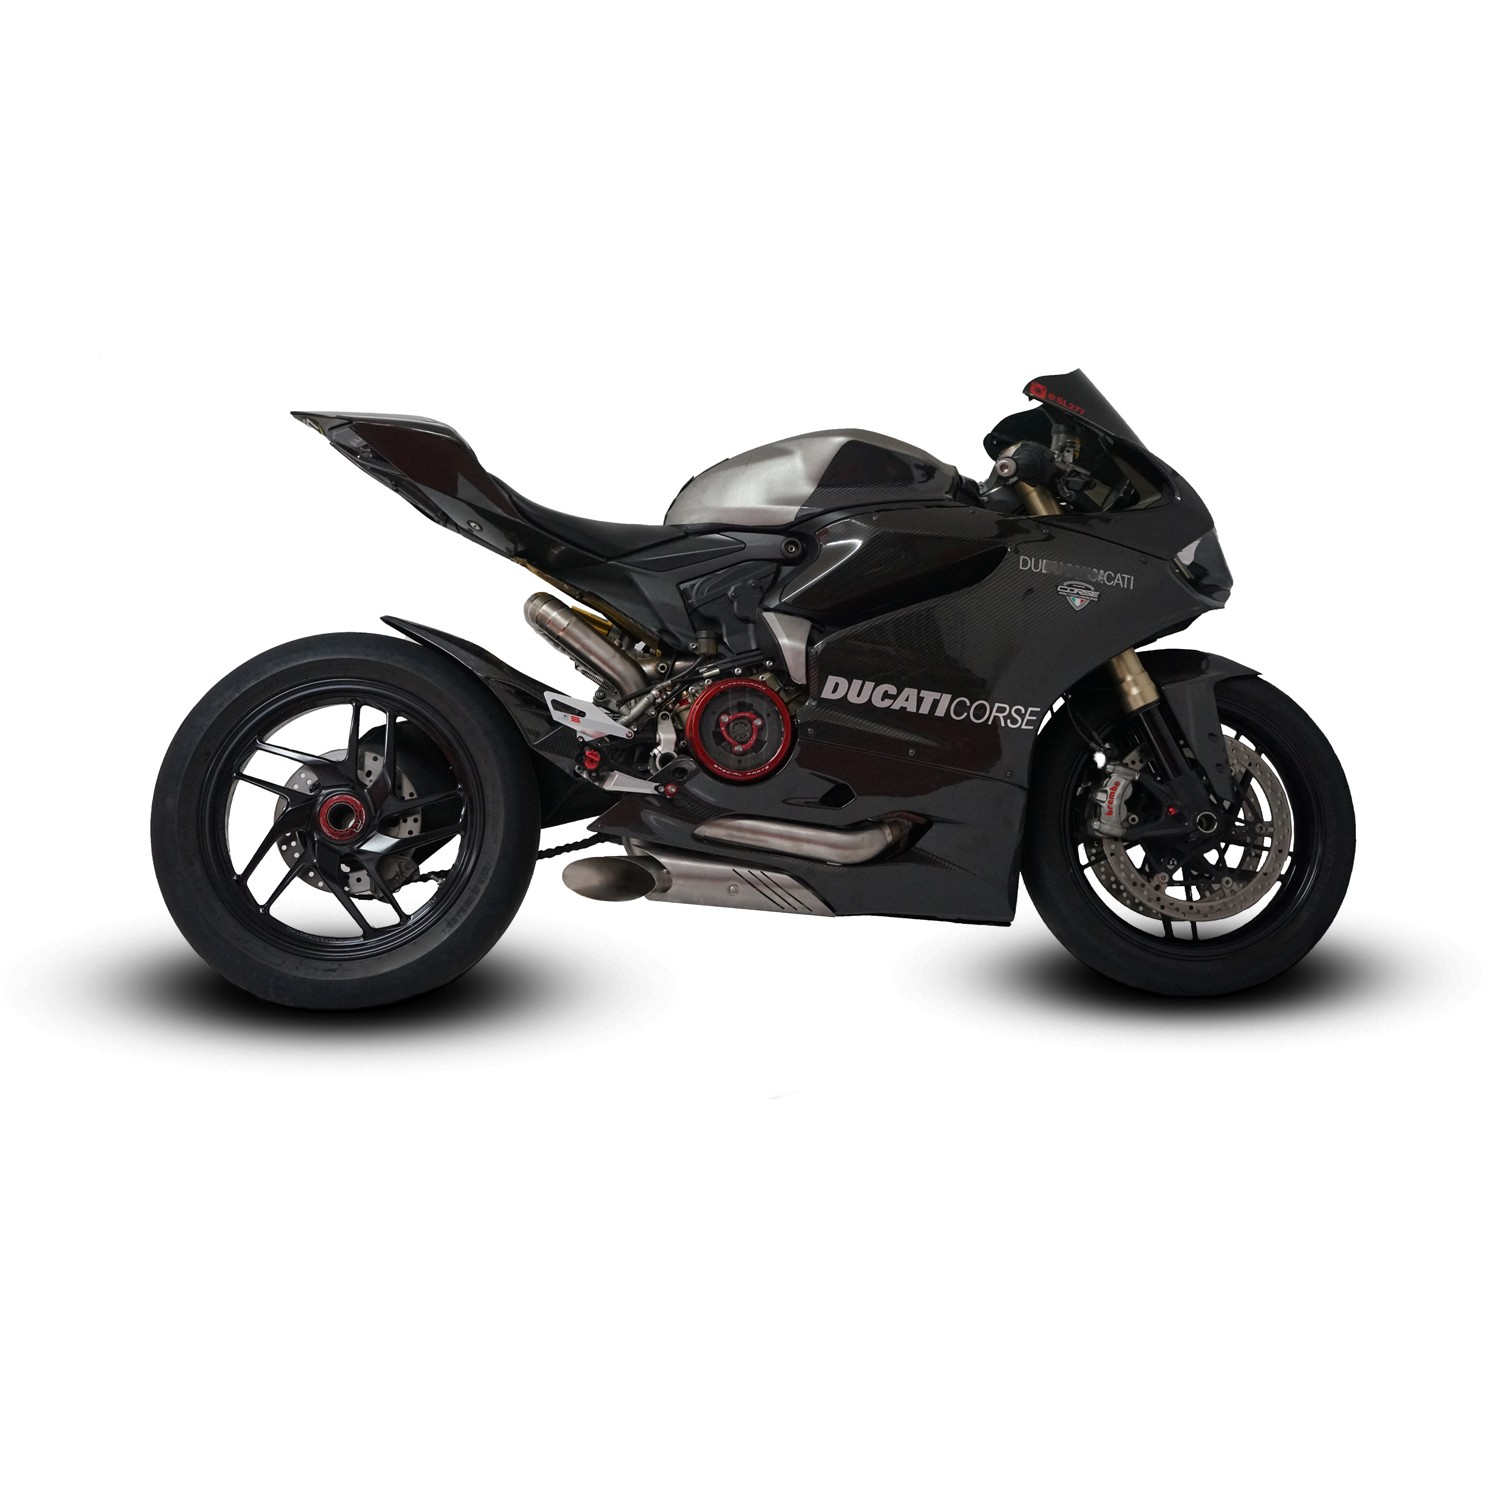 Ducati Panigale 899 959 1199 1299 2011 2019 Gp2 Exhaust System Austin Racing Exhausts Australia